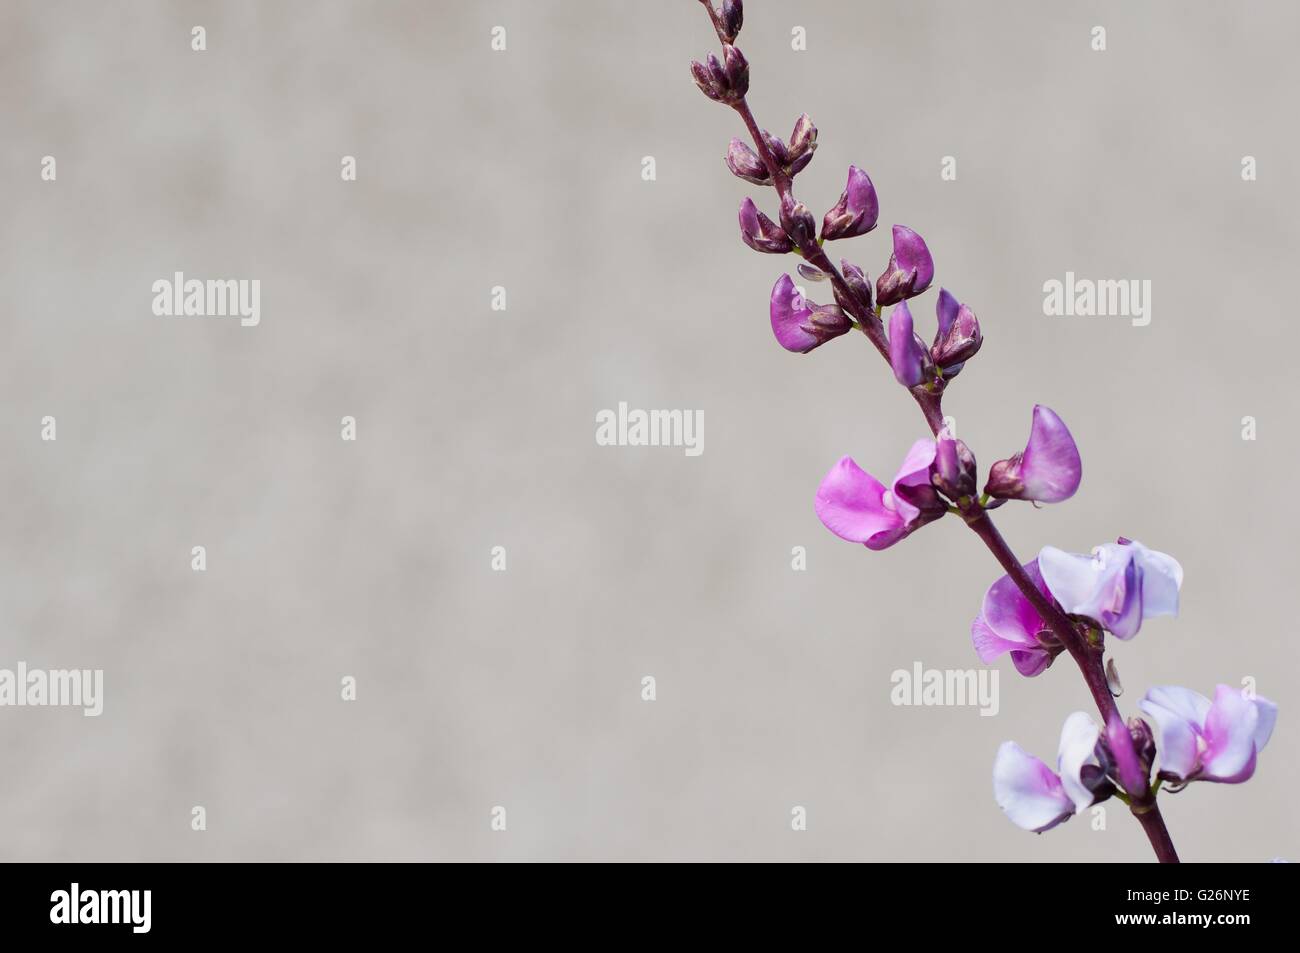 Flowers of Purple Hyacinth Bean (Lablab purpureus) in right side of image Stock Photo